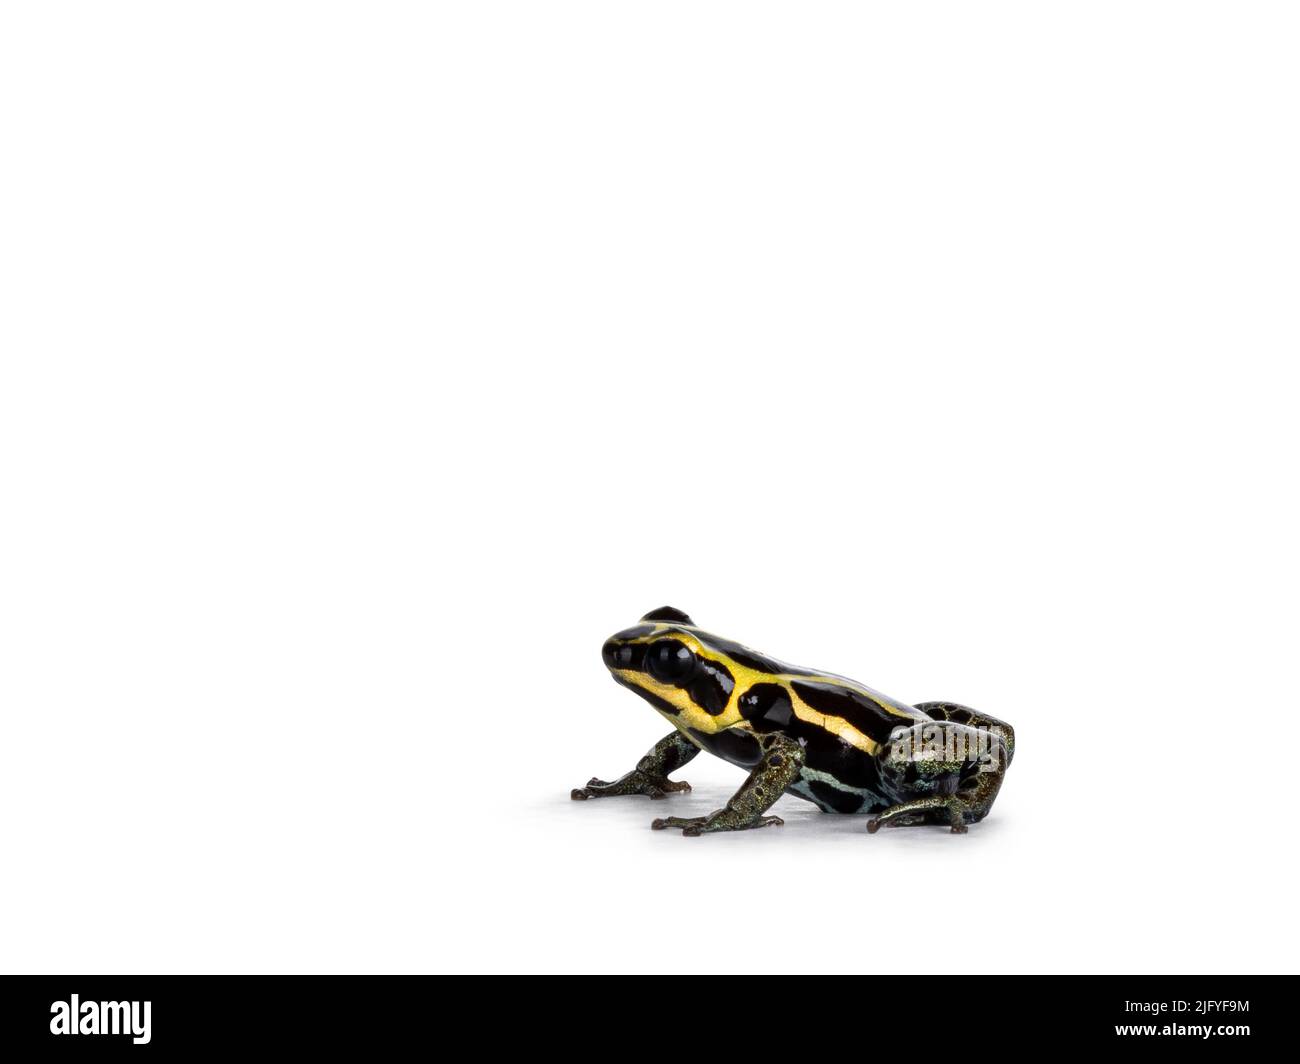 Tiny ranitomeya ventrimaculata aka reticulated poison frog sitting side ways. Isolated on a white background. Stock Photo